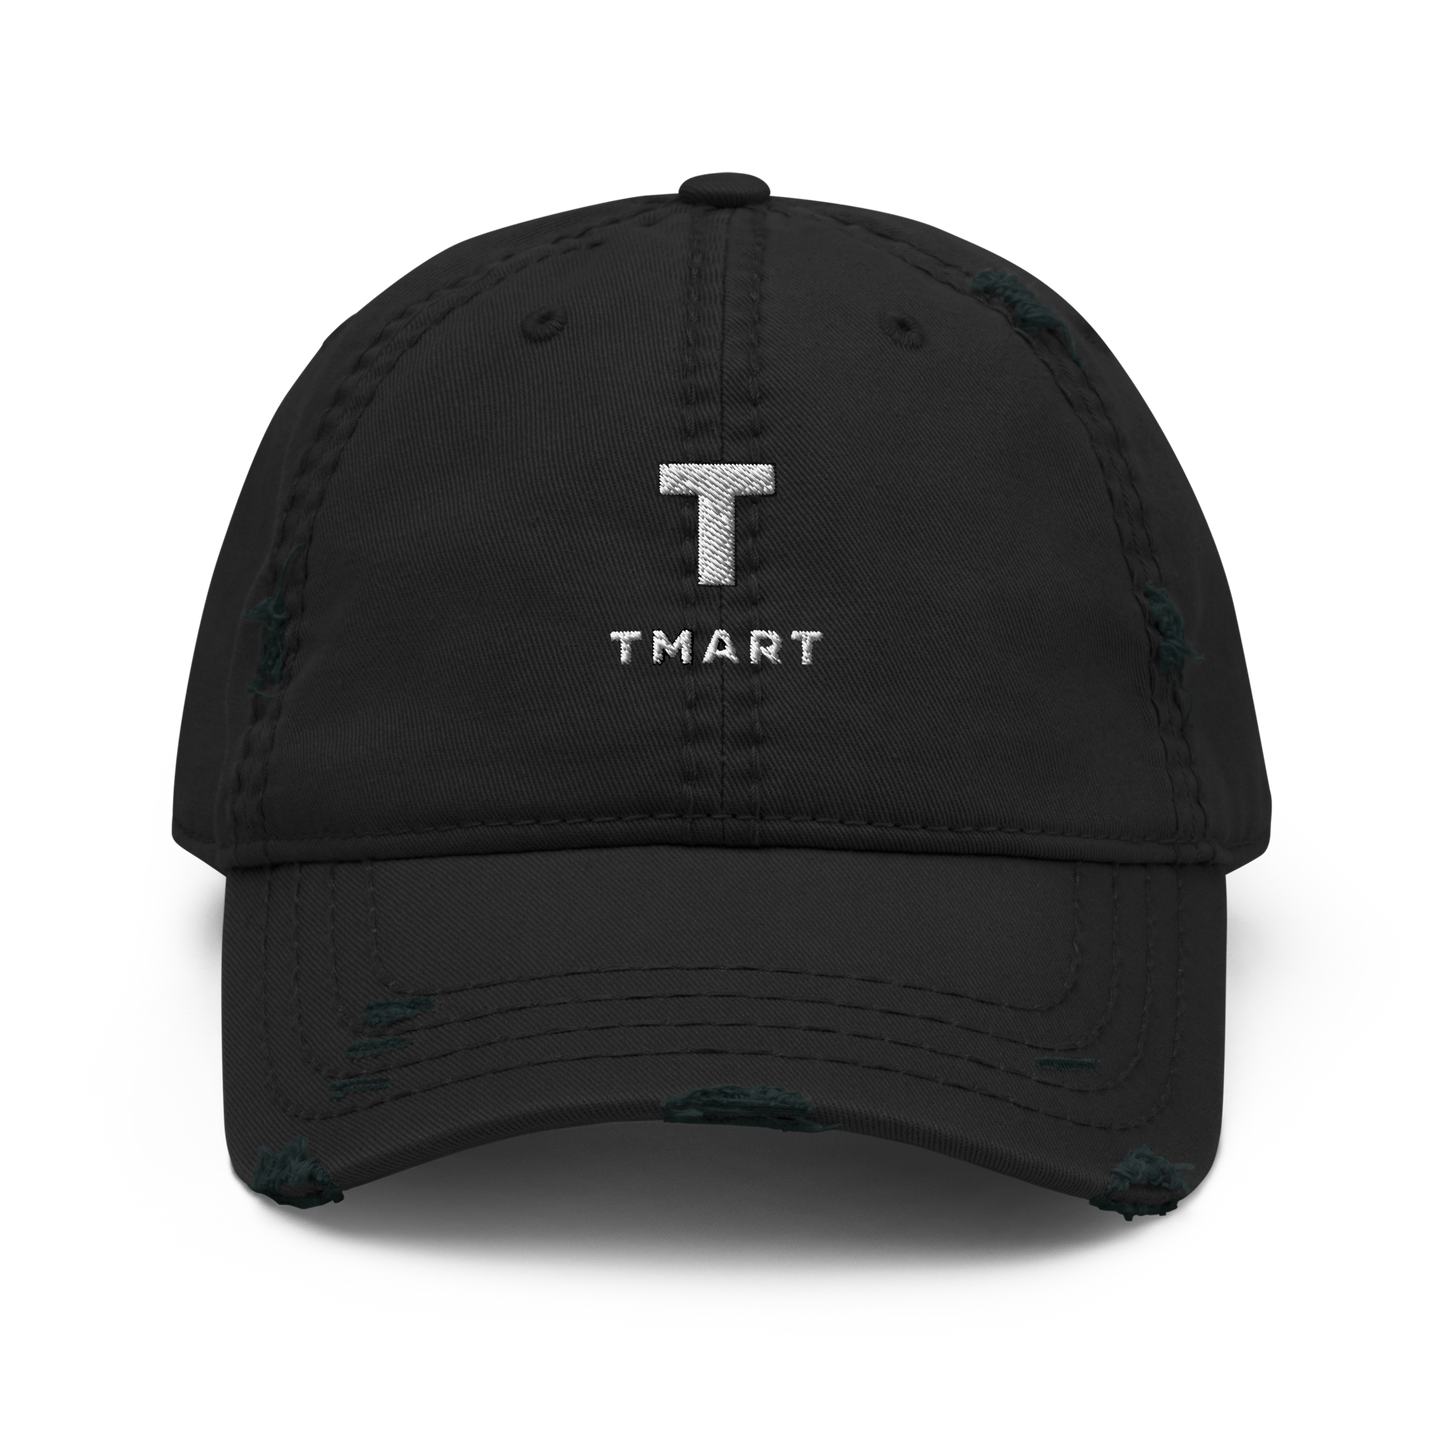 Tmart Distressed Dad Hat